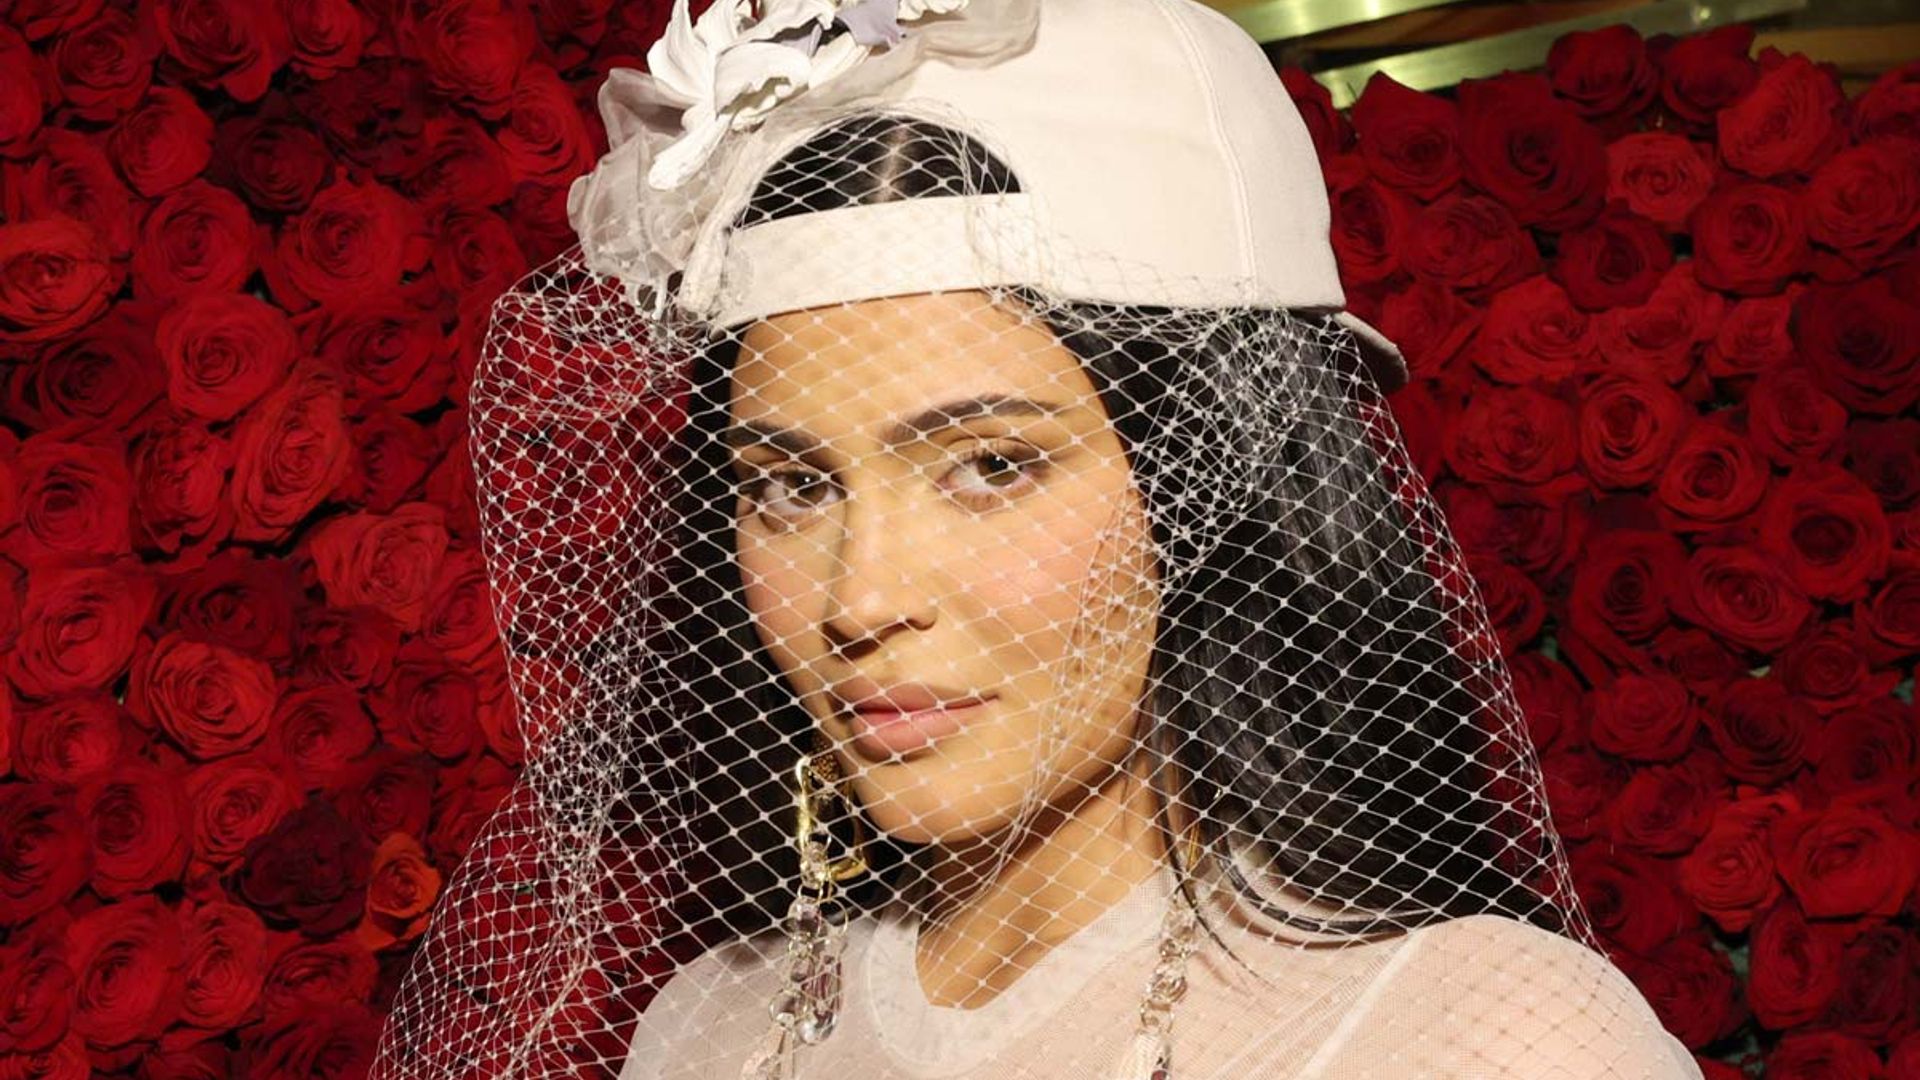 Kylie Jenner's heartbreaking Met Gala wedding dress had very